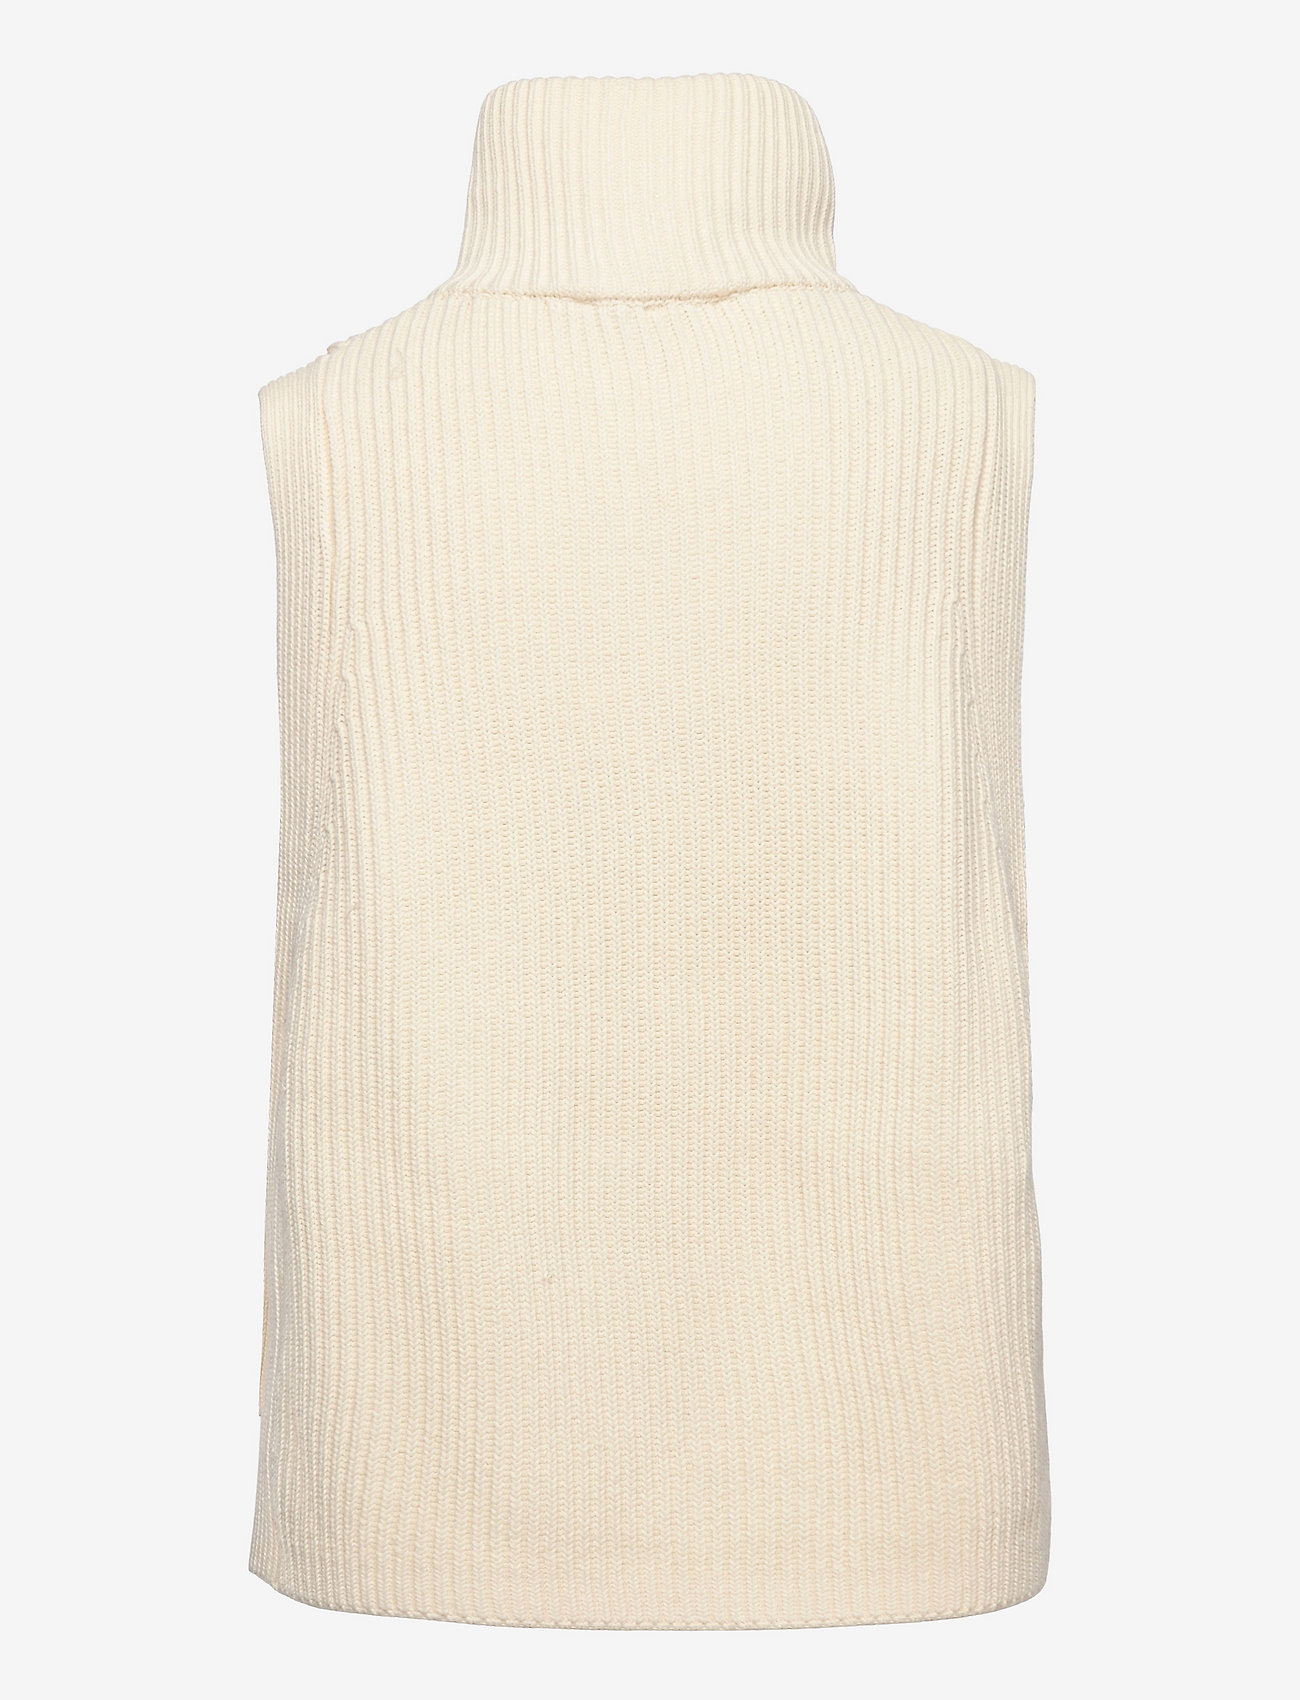 Just Female - Gorm zip vest - knitted vests - off white - 1